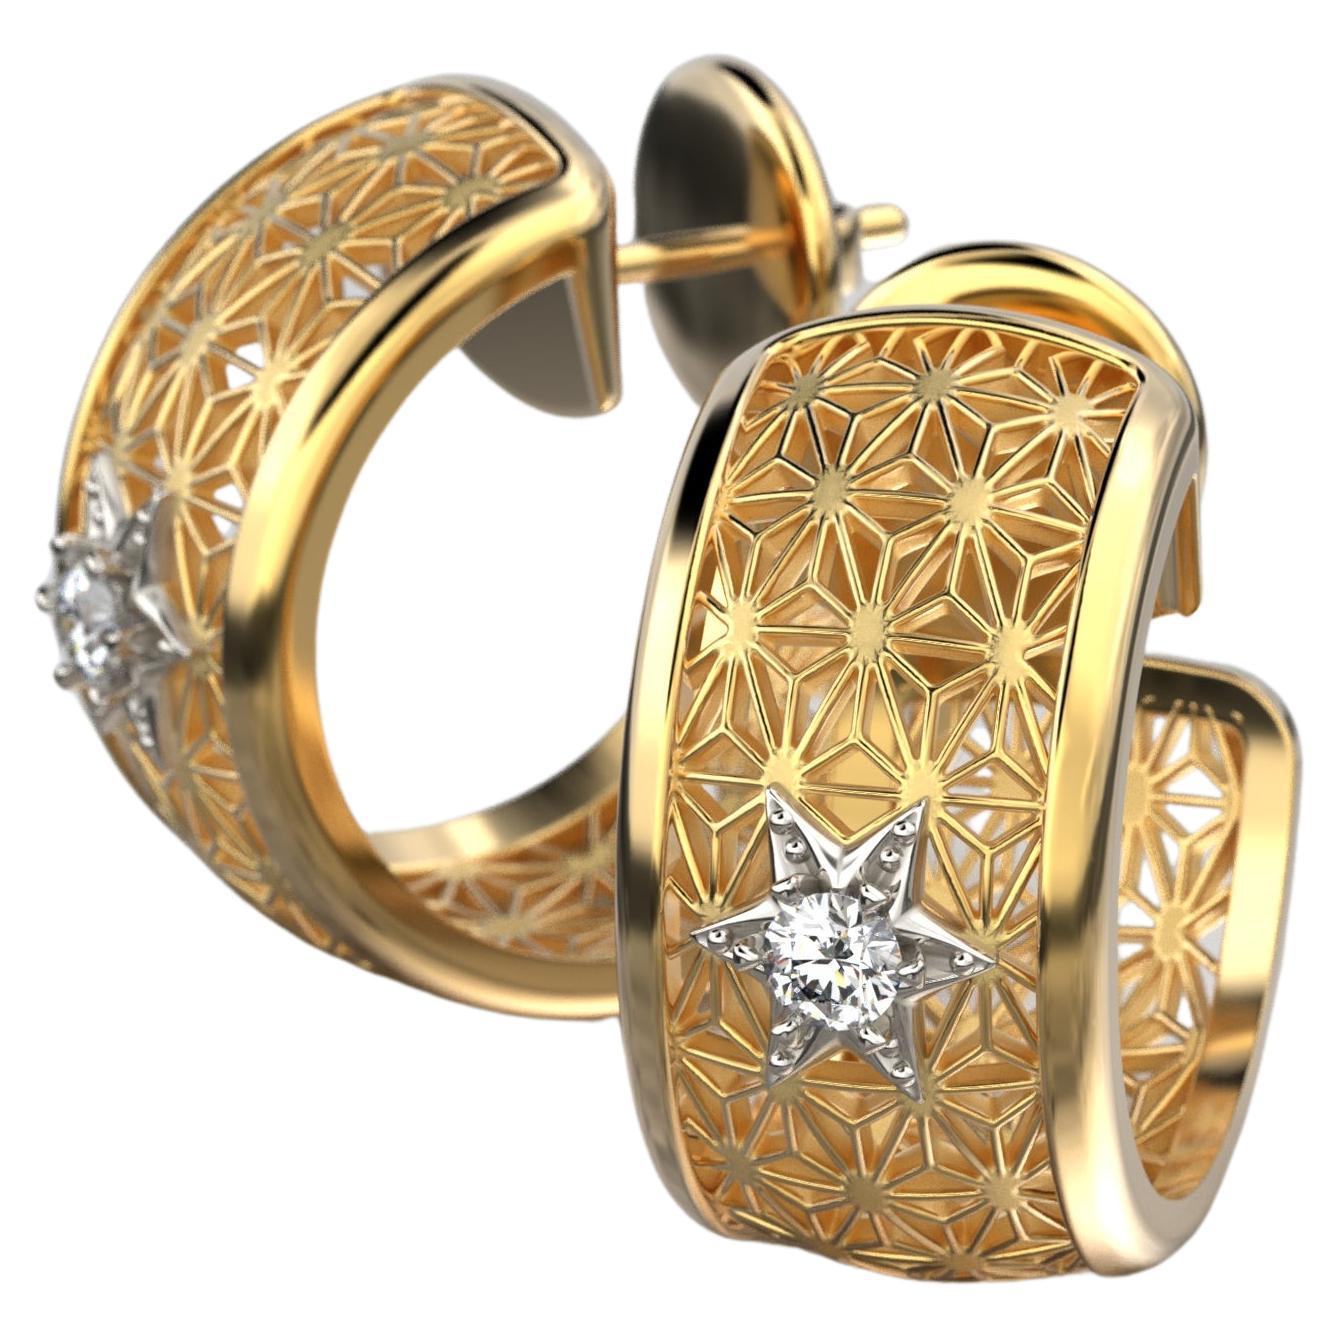 Oltremare Gioielli Diamond Hoop Earrings 14k Gold Made in Italy, Sashiko Pattern